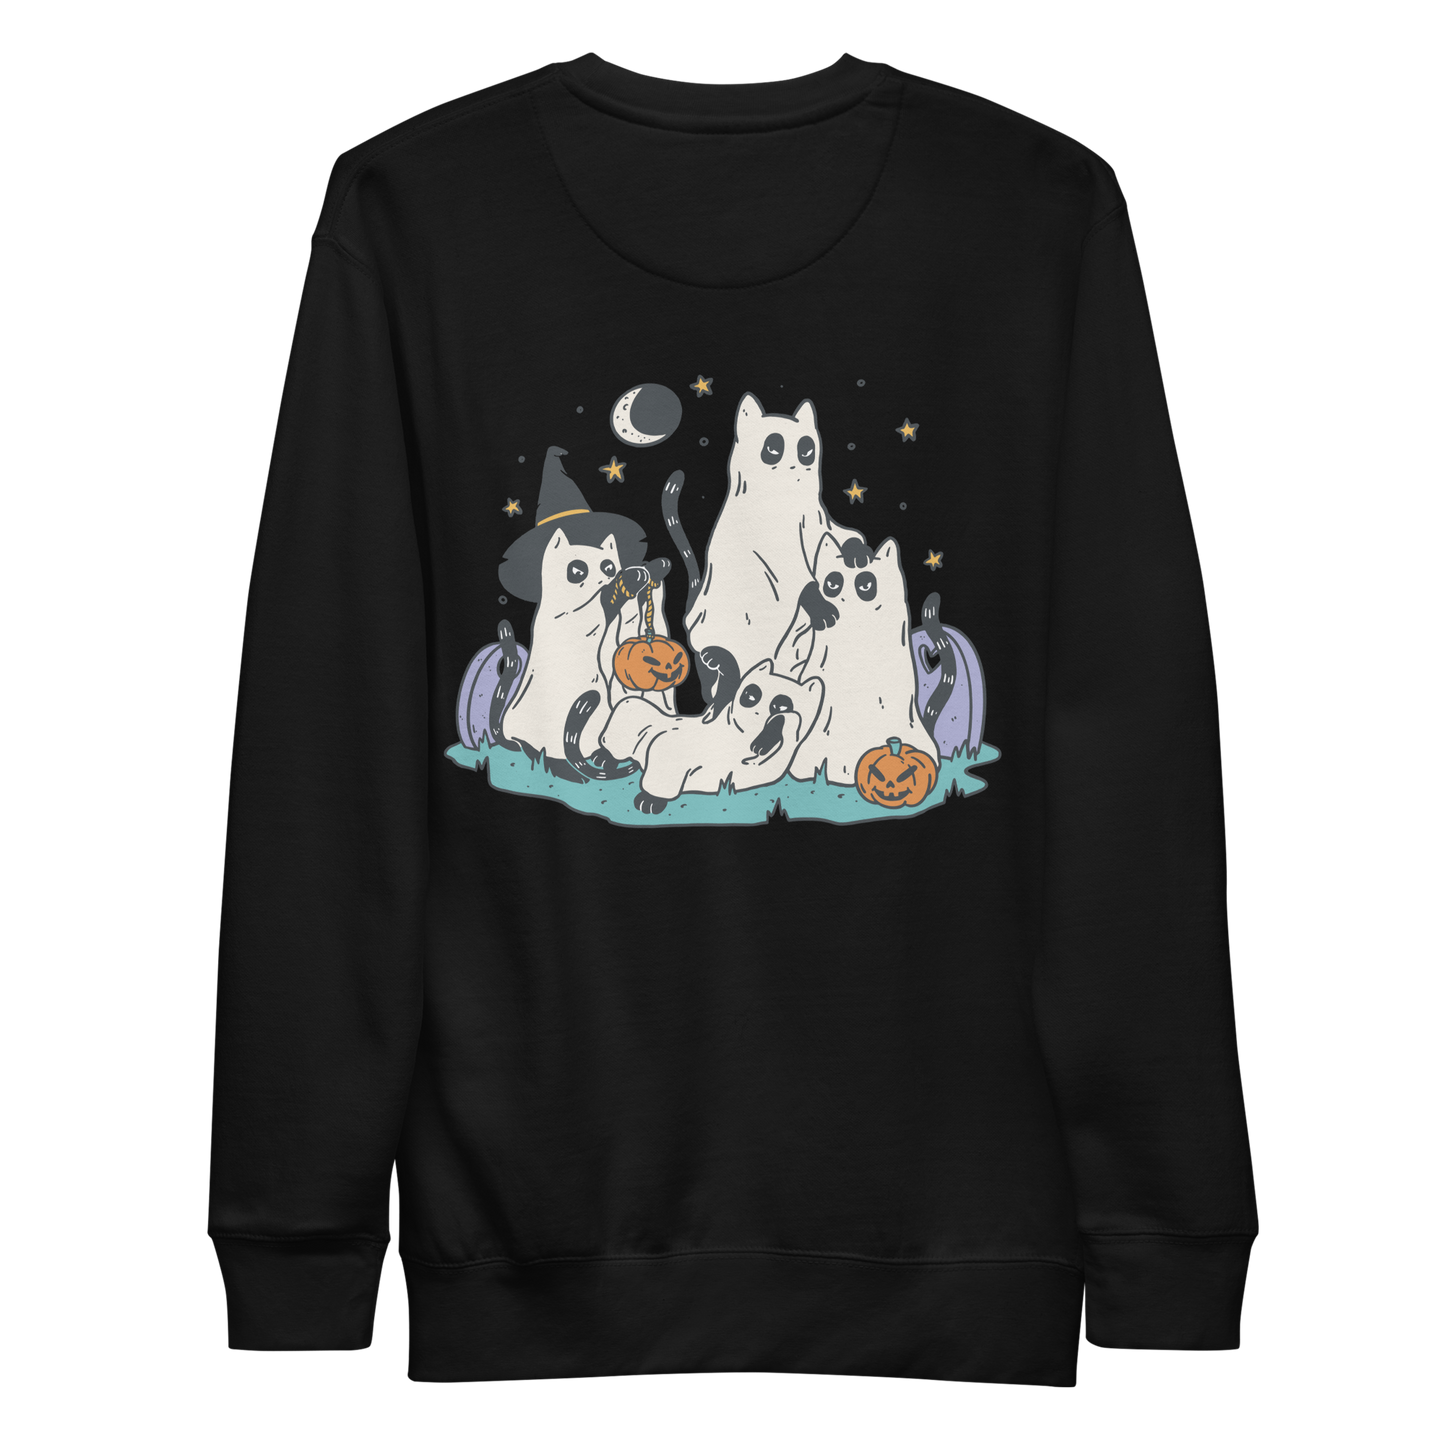 Spooky Halloween phantom cats | Unisex Premium Sweatshirt - F&B